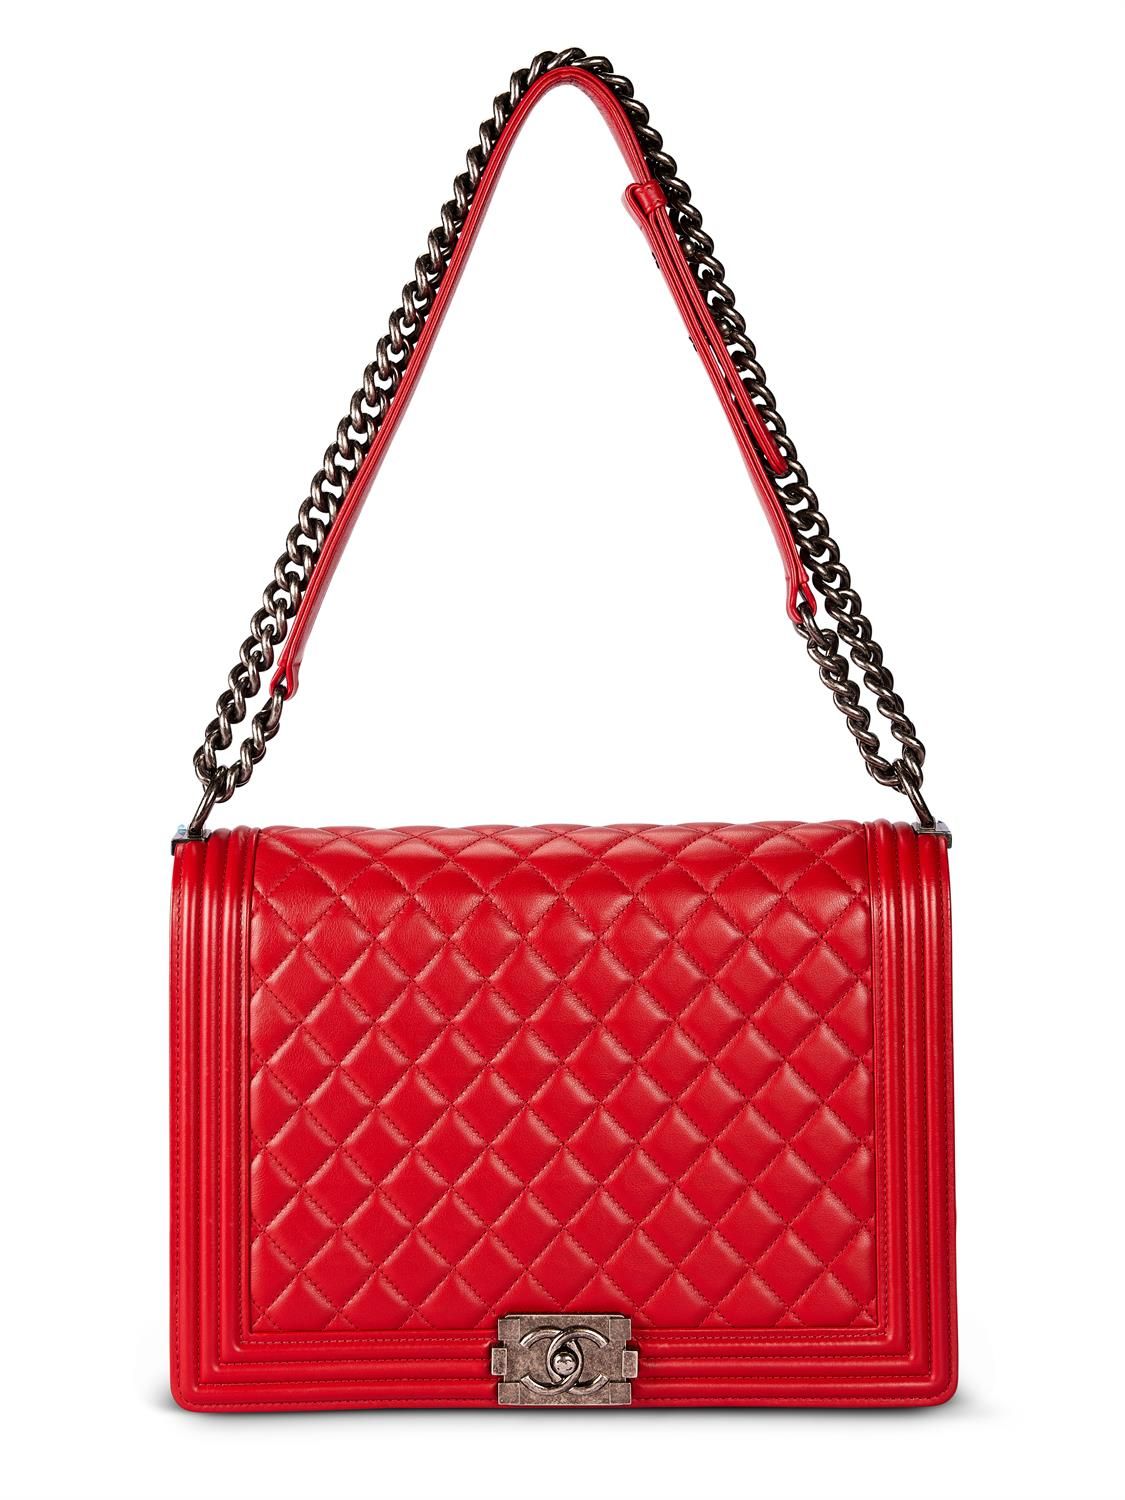 Chanel, Boy, a red calfskin quilted leather shoulder bag Chanel, Boy, bolso de h&hellip;